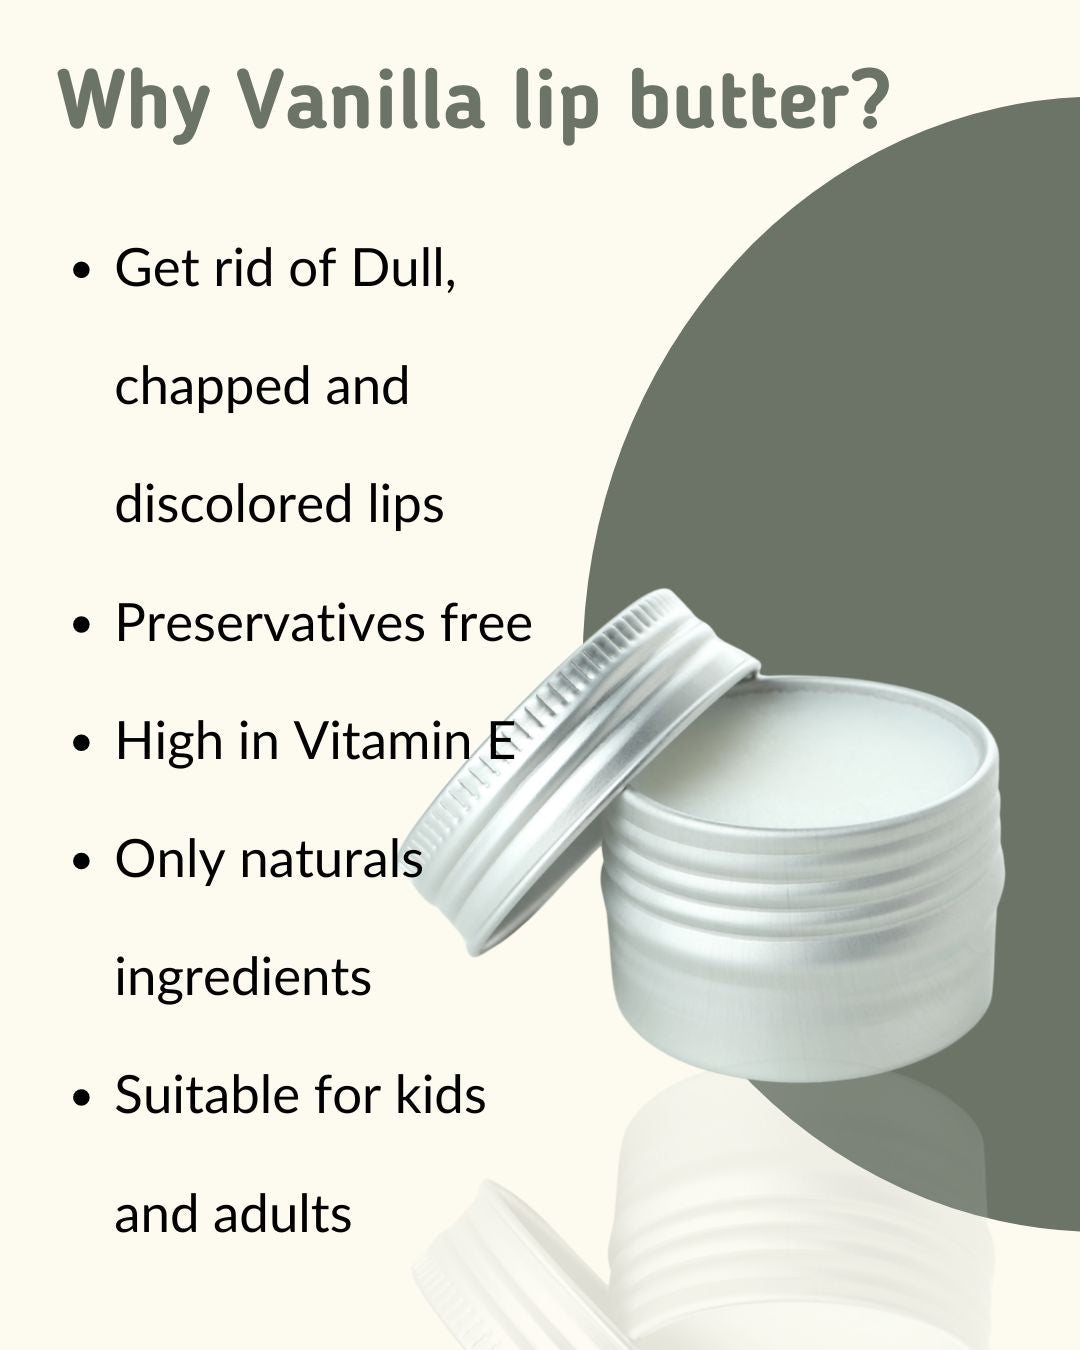 Infographics showing vanilla lip balm benefits